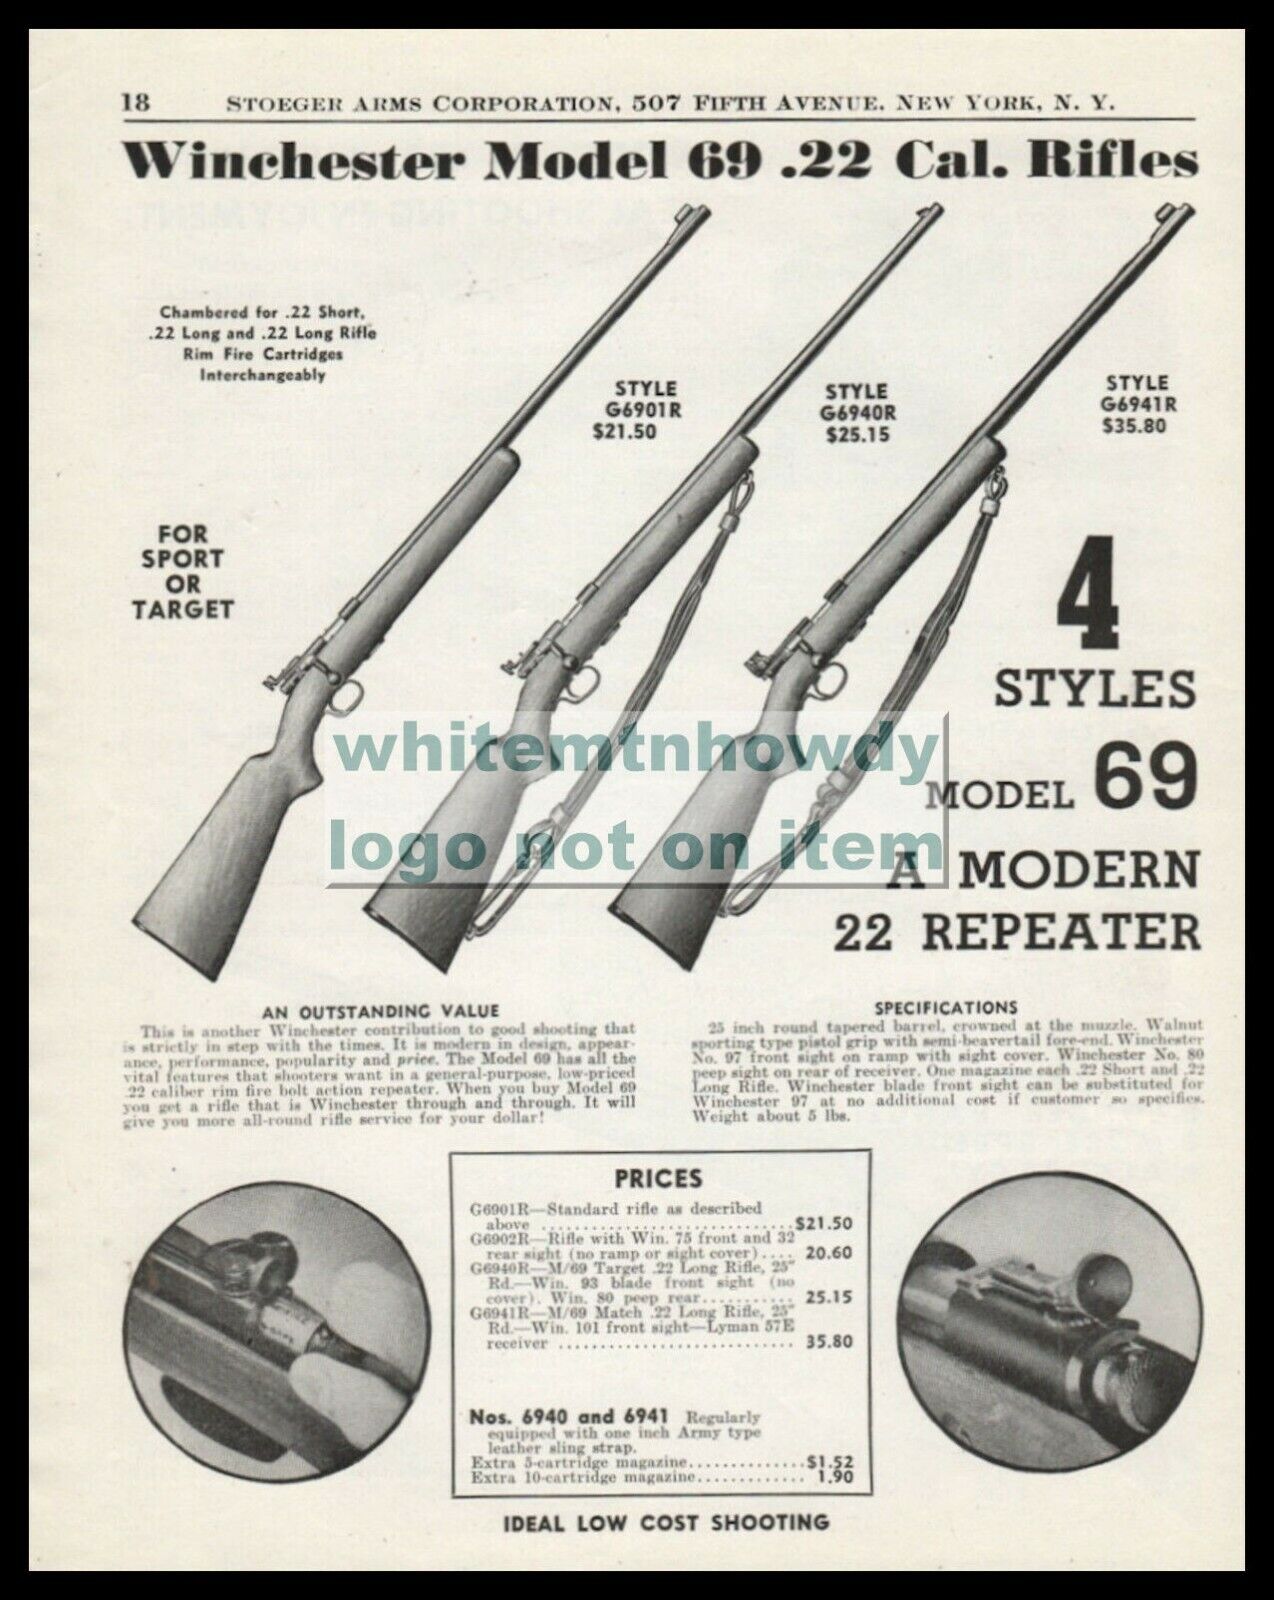 1948 WINCHESTER Model 69 G6901R, G6940R, G6941R Rifle PRINT AD w/original prices